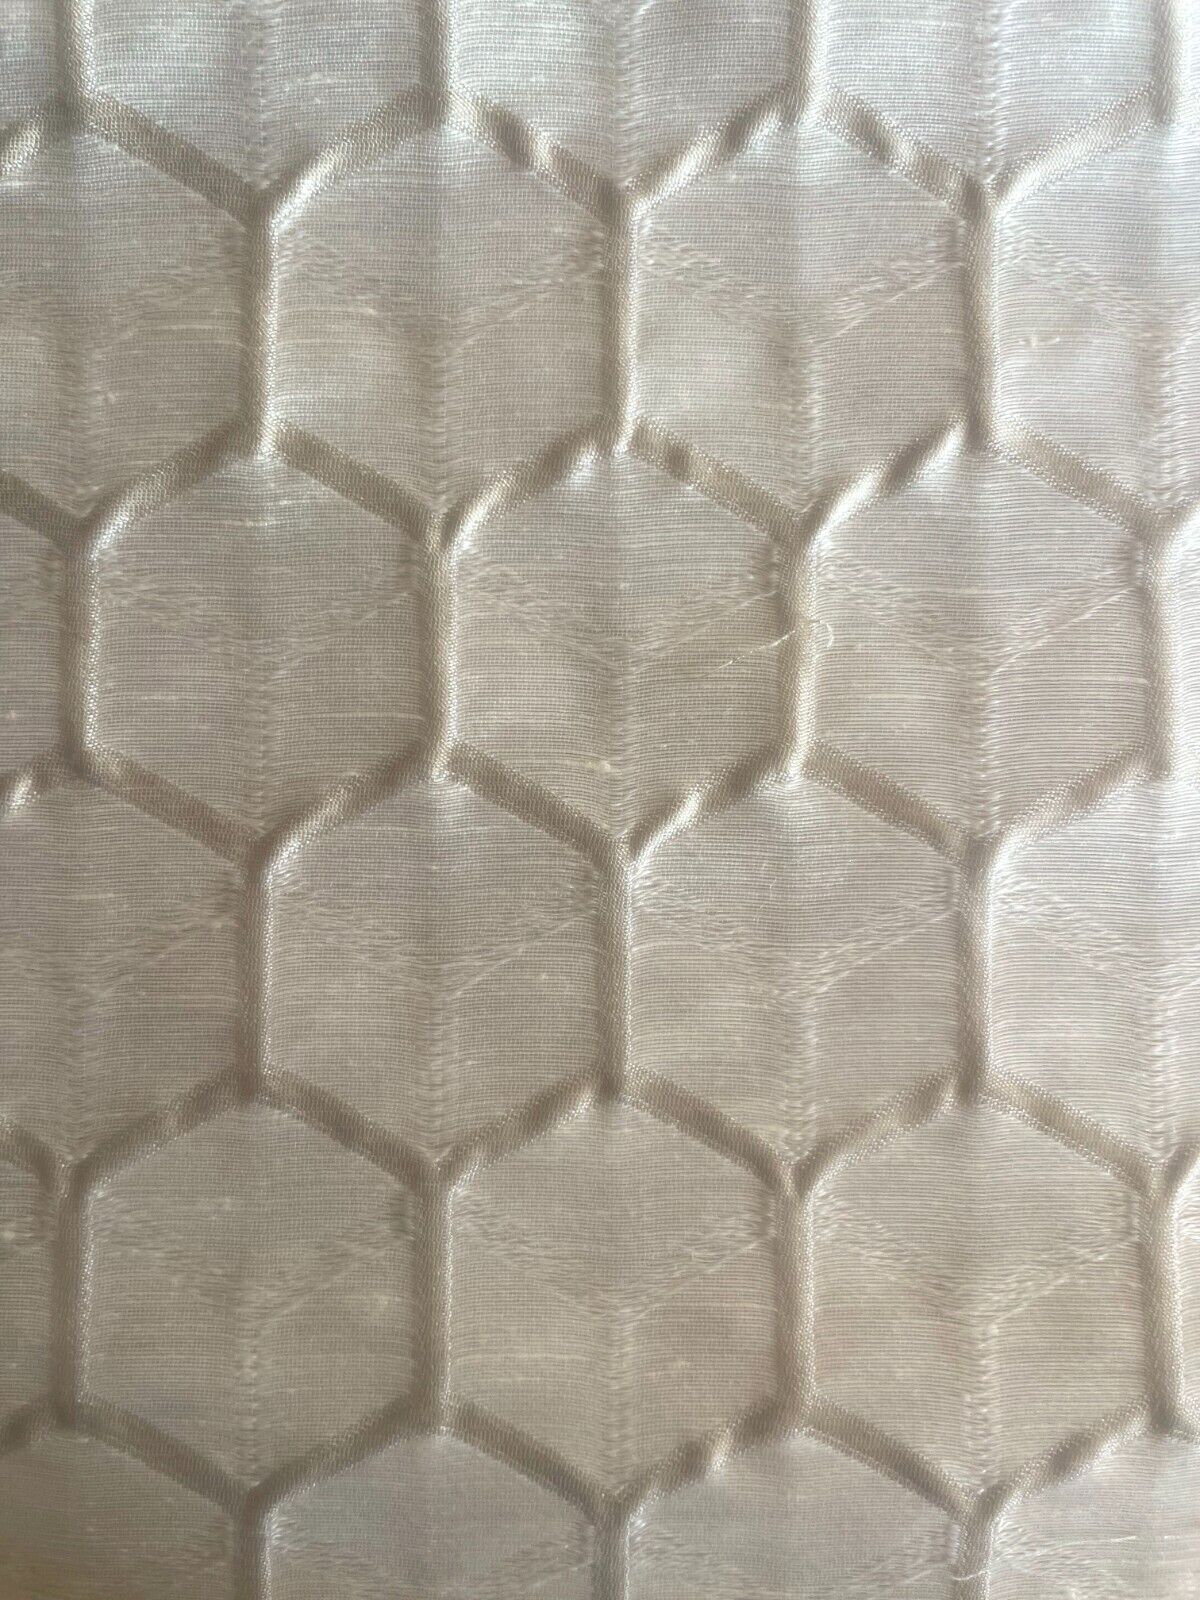 8 yds Honeycomb Champagne Ivory Geometric Multi Purpose Upholstery Fabric